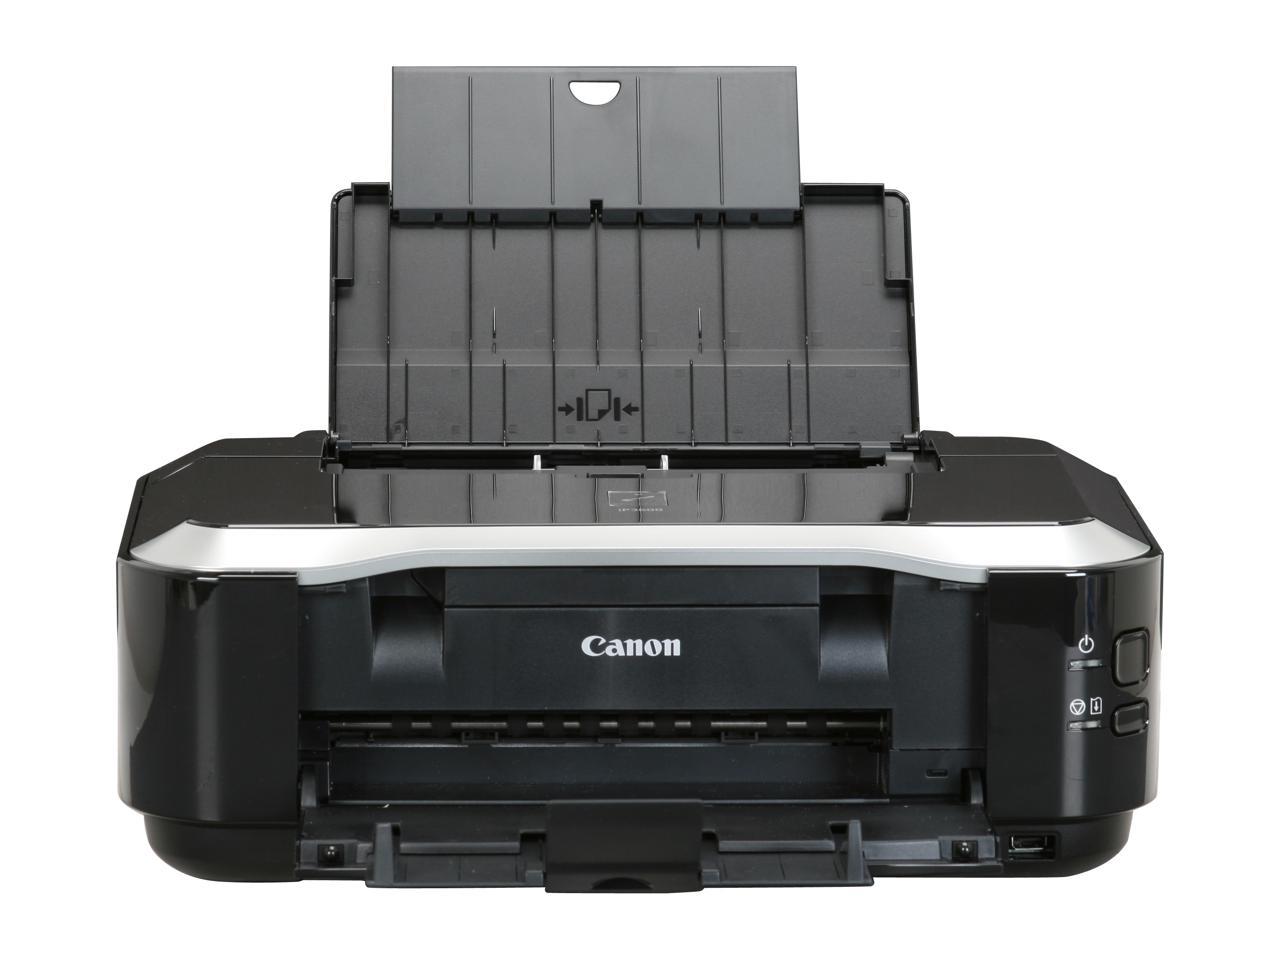 Canon 2868B002 InkJet Photo Printer - Newegg.com